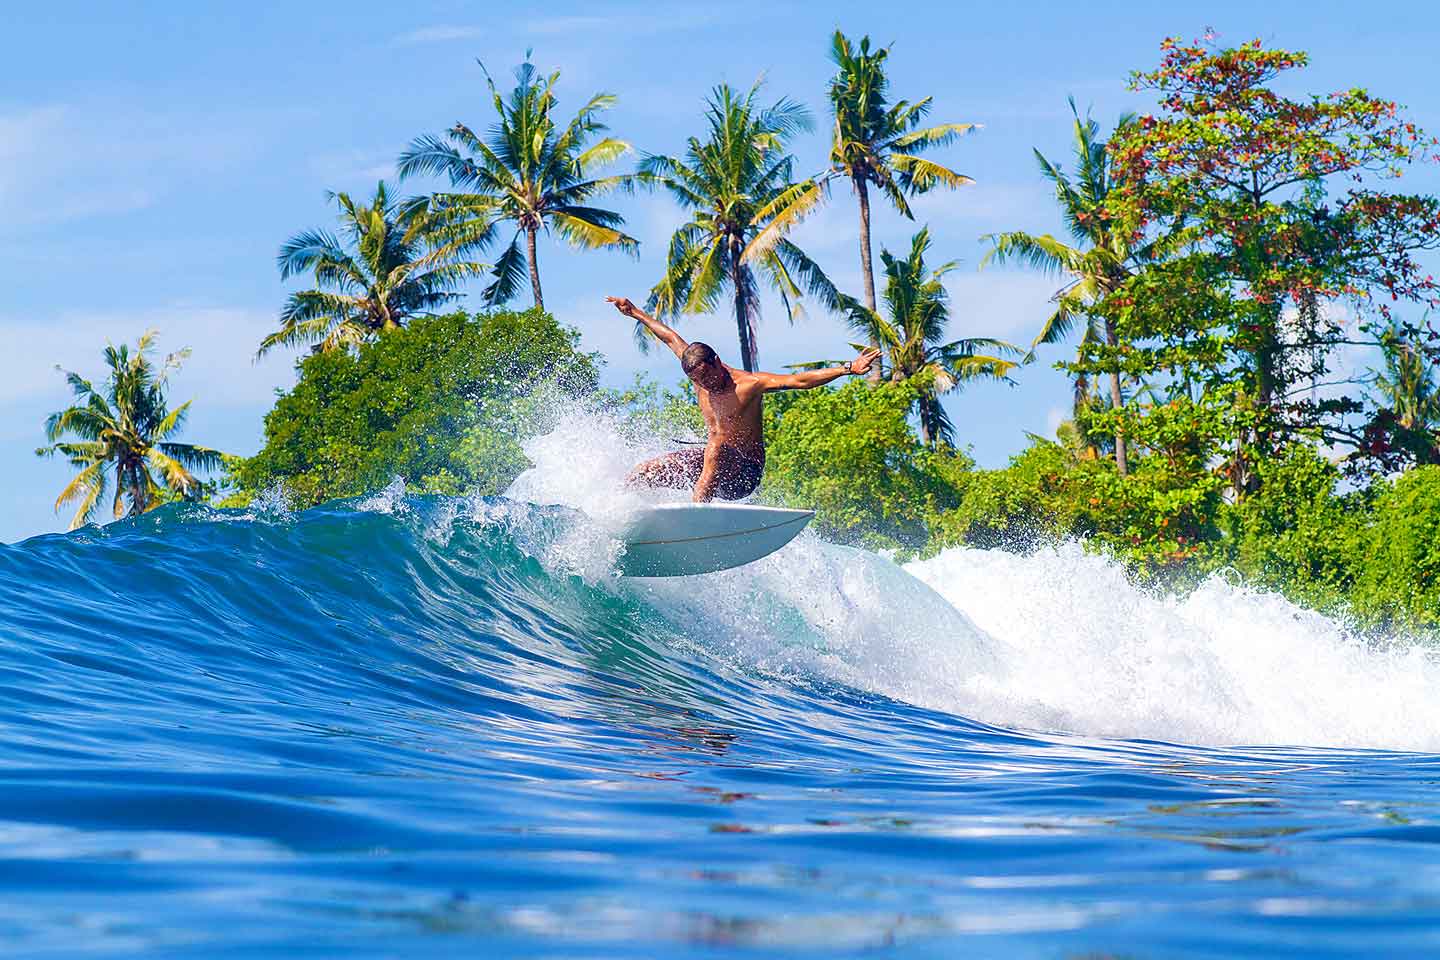 Surfer catching a wave at Uluwatu